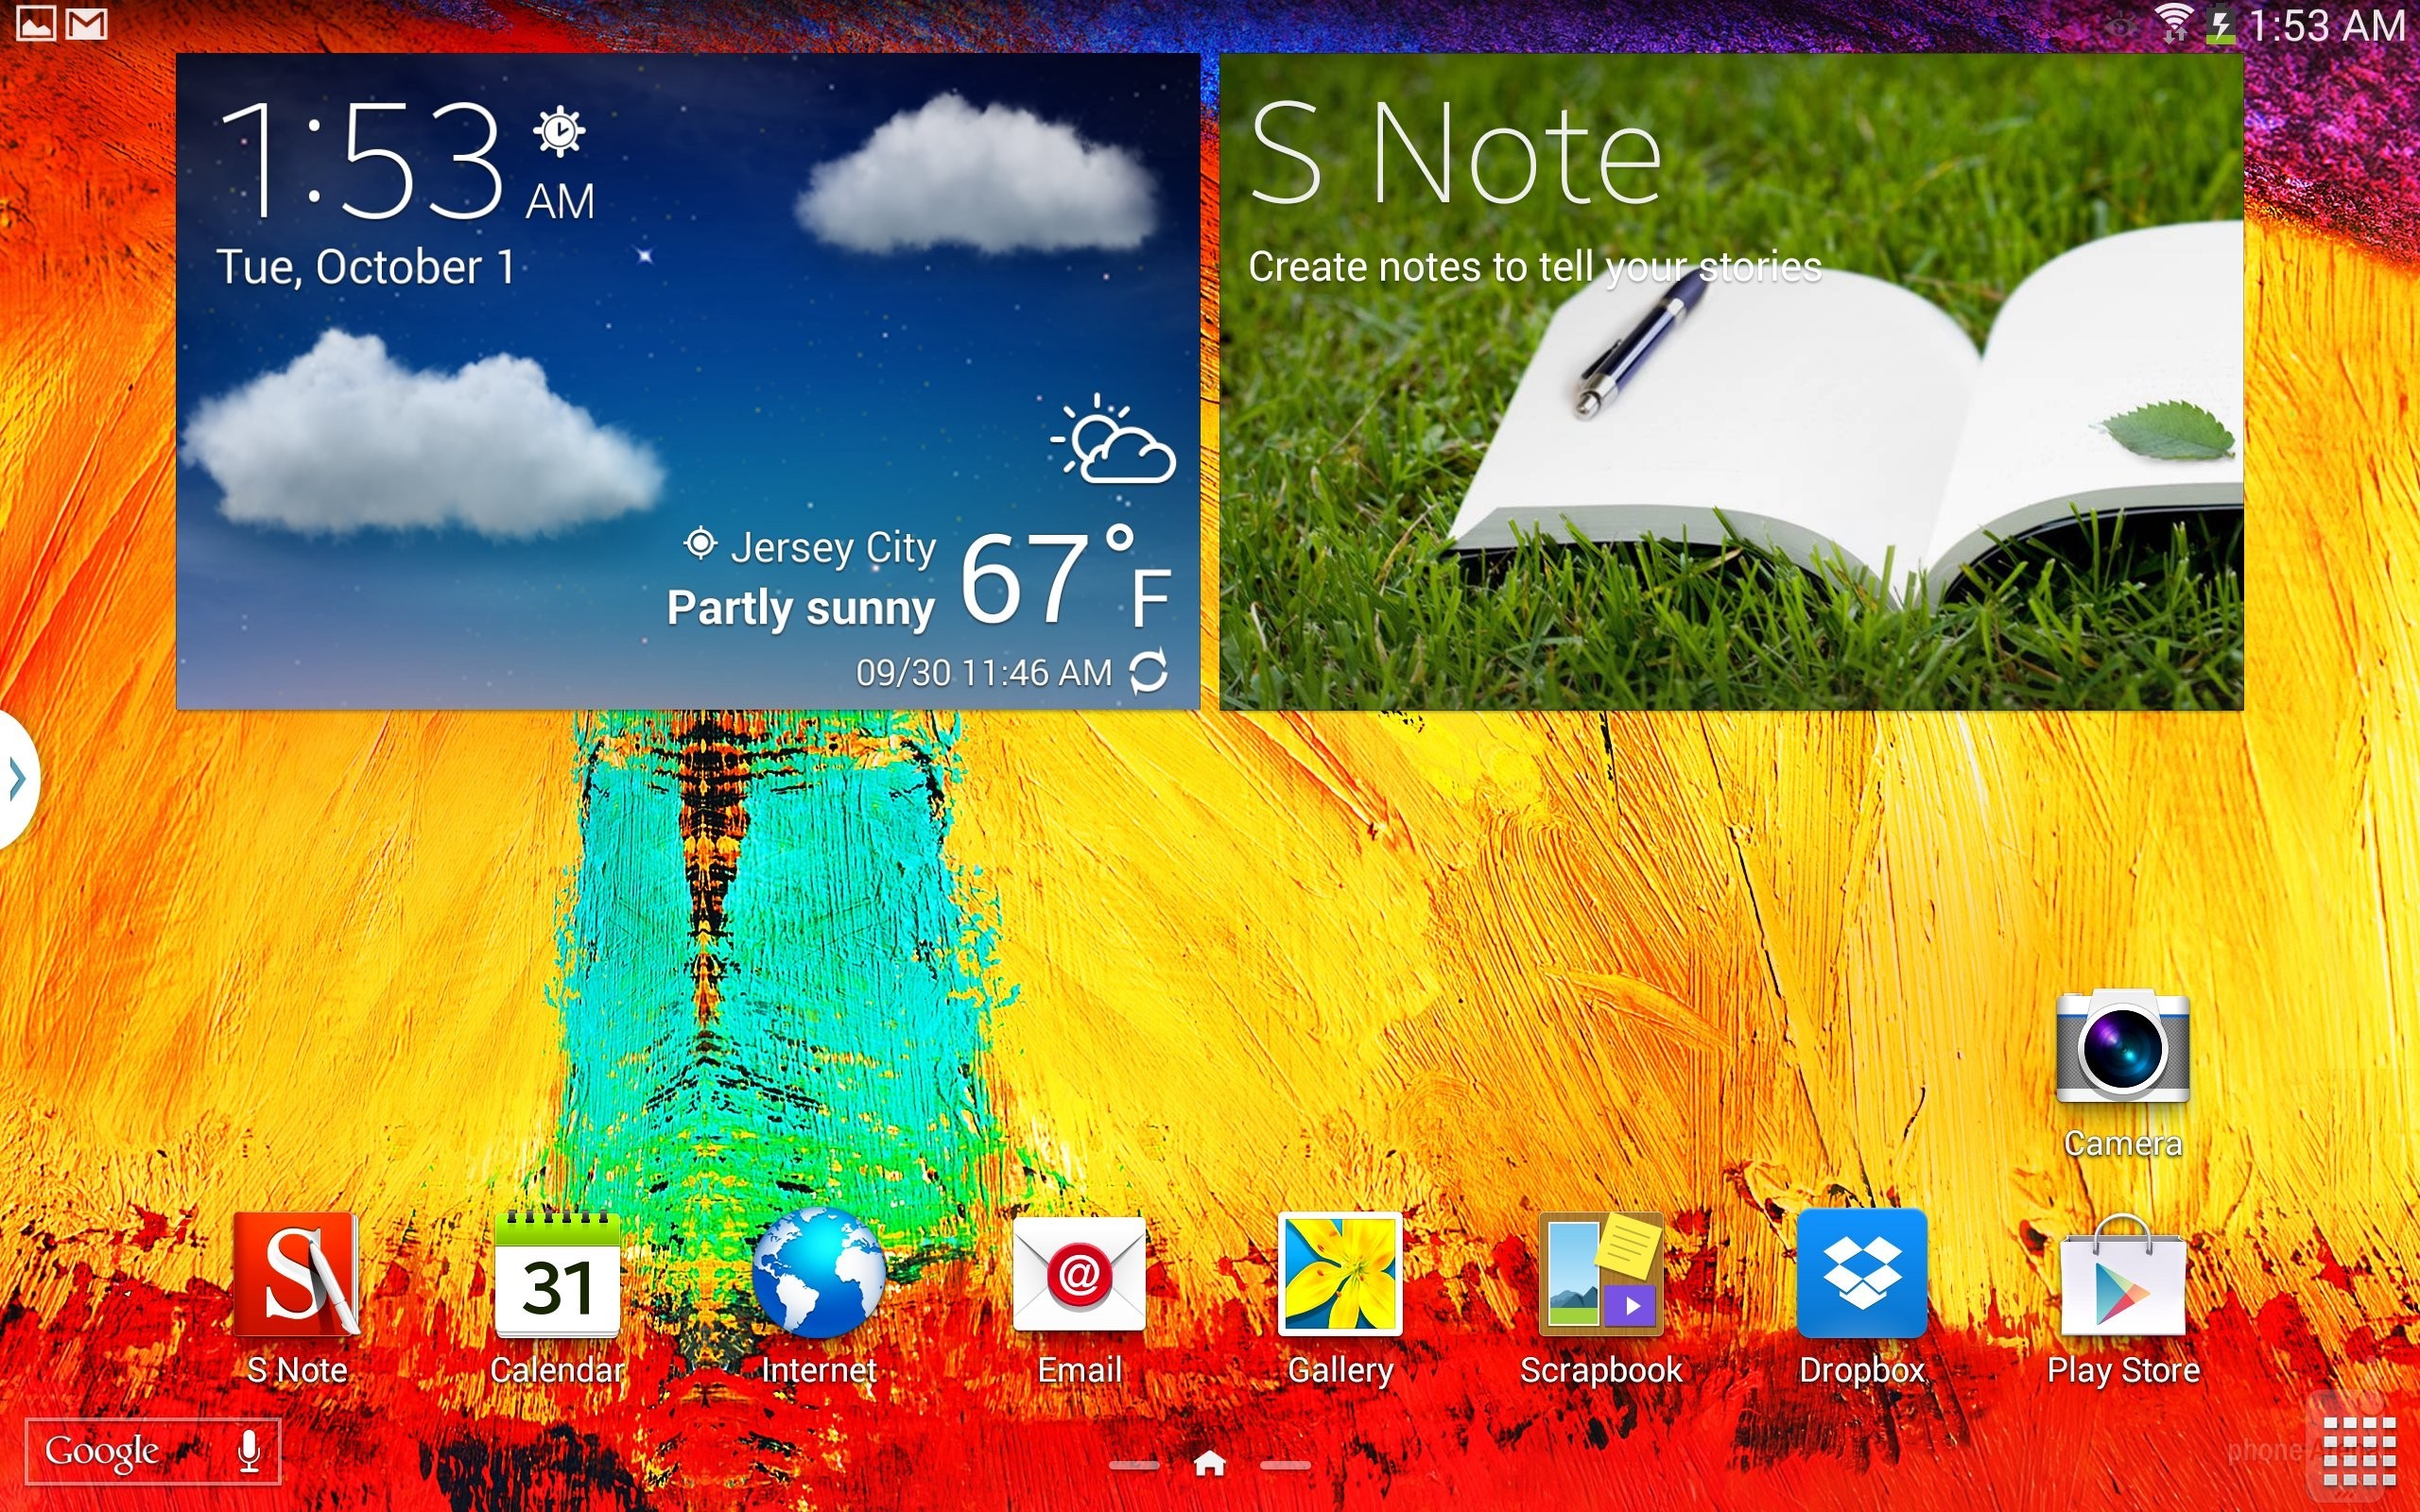 2560x1600 Galaxy Note 10.1 2014 Wallpaper Samsung galaxy note 10.1 (2014